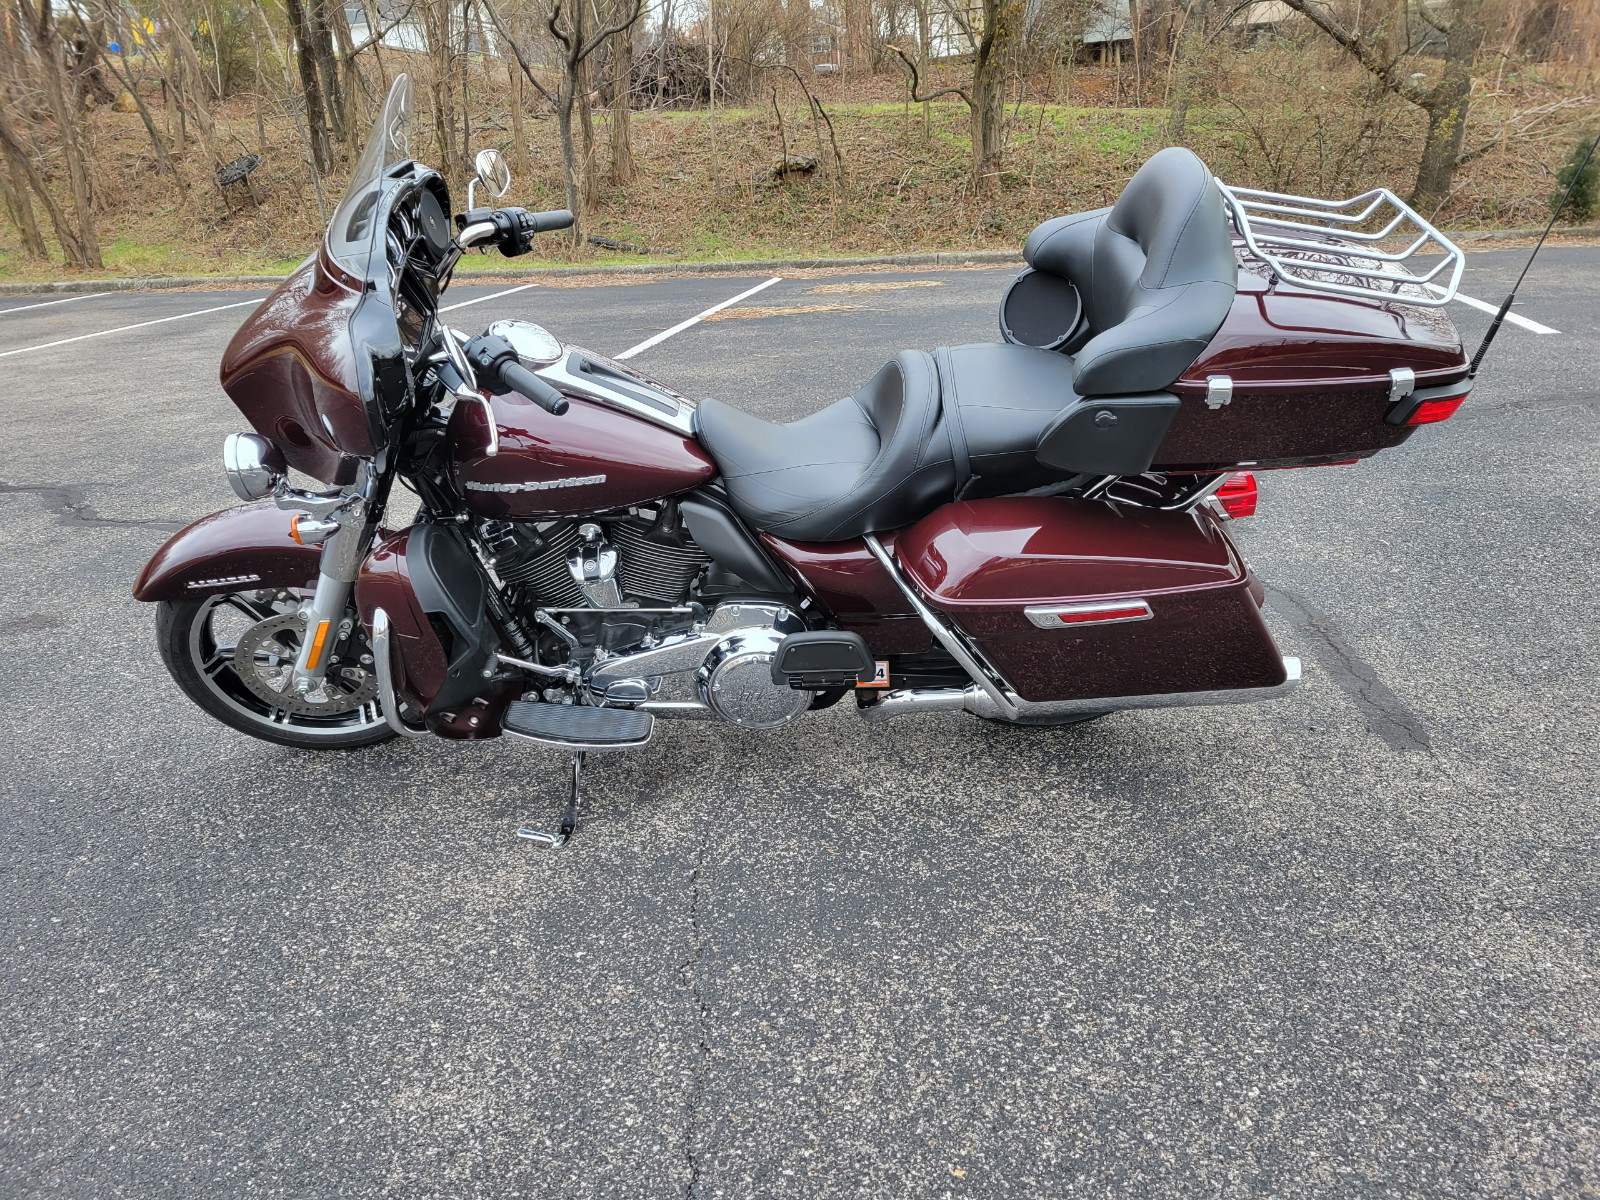 2021 Harley-Davidson Electra Glide Limited in Roanoke, Virginia - Photo 3